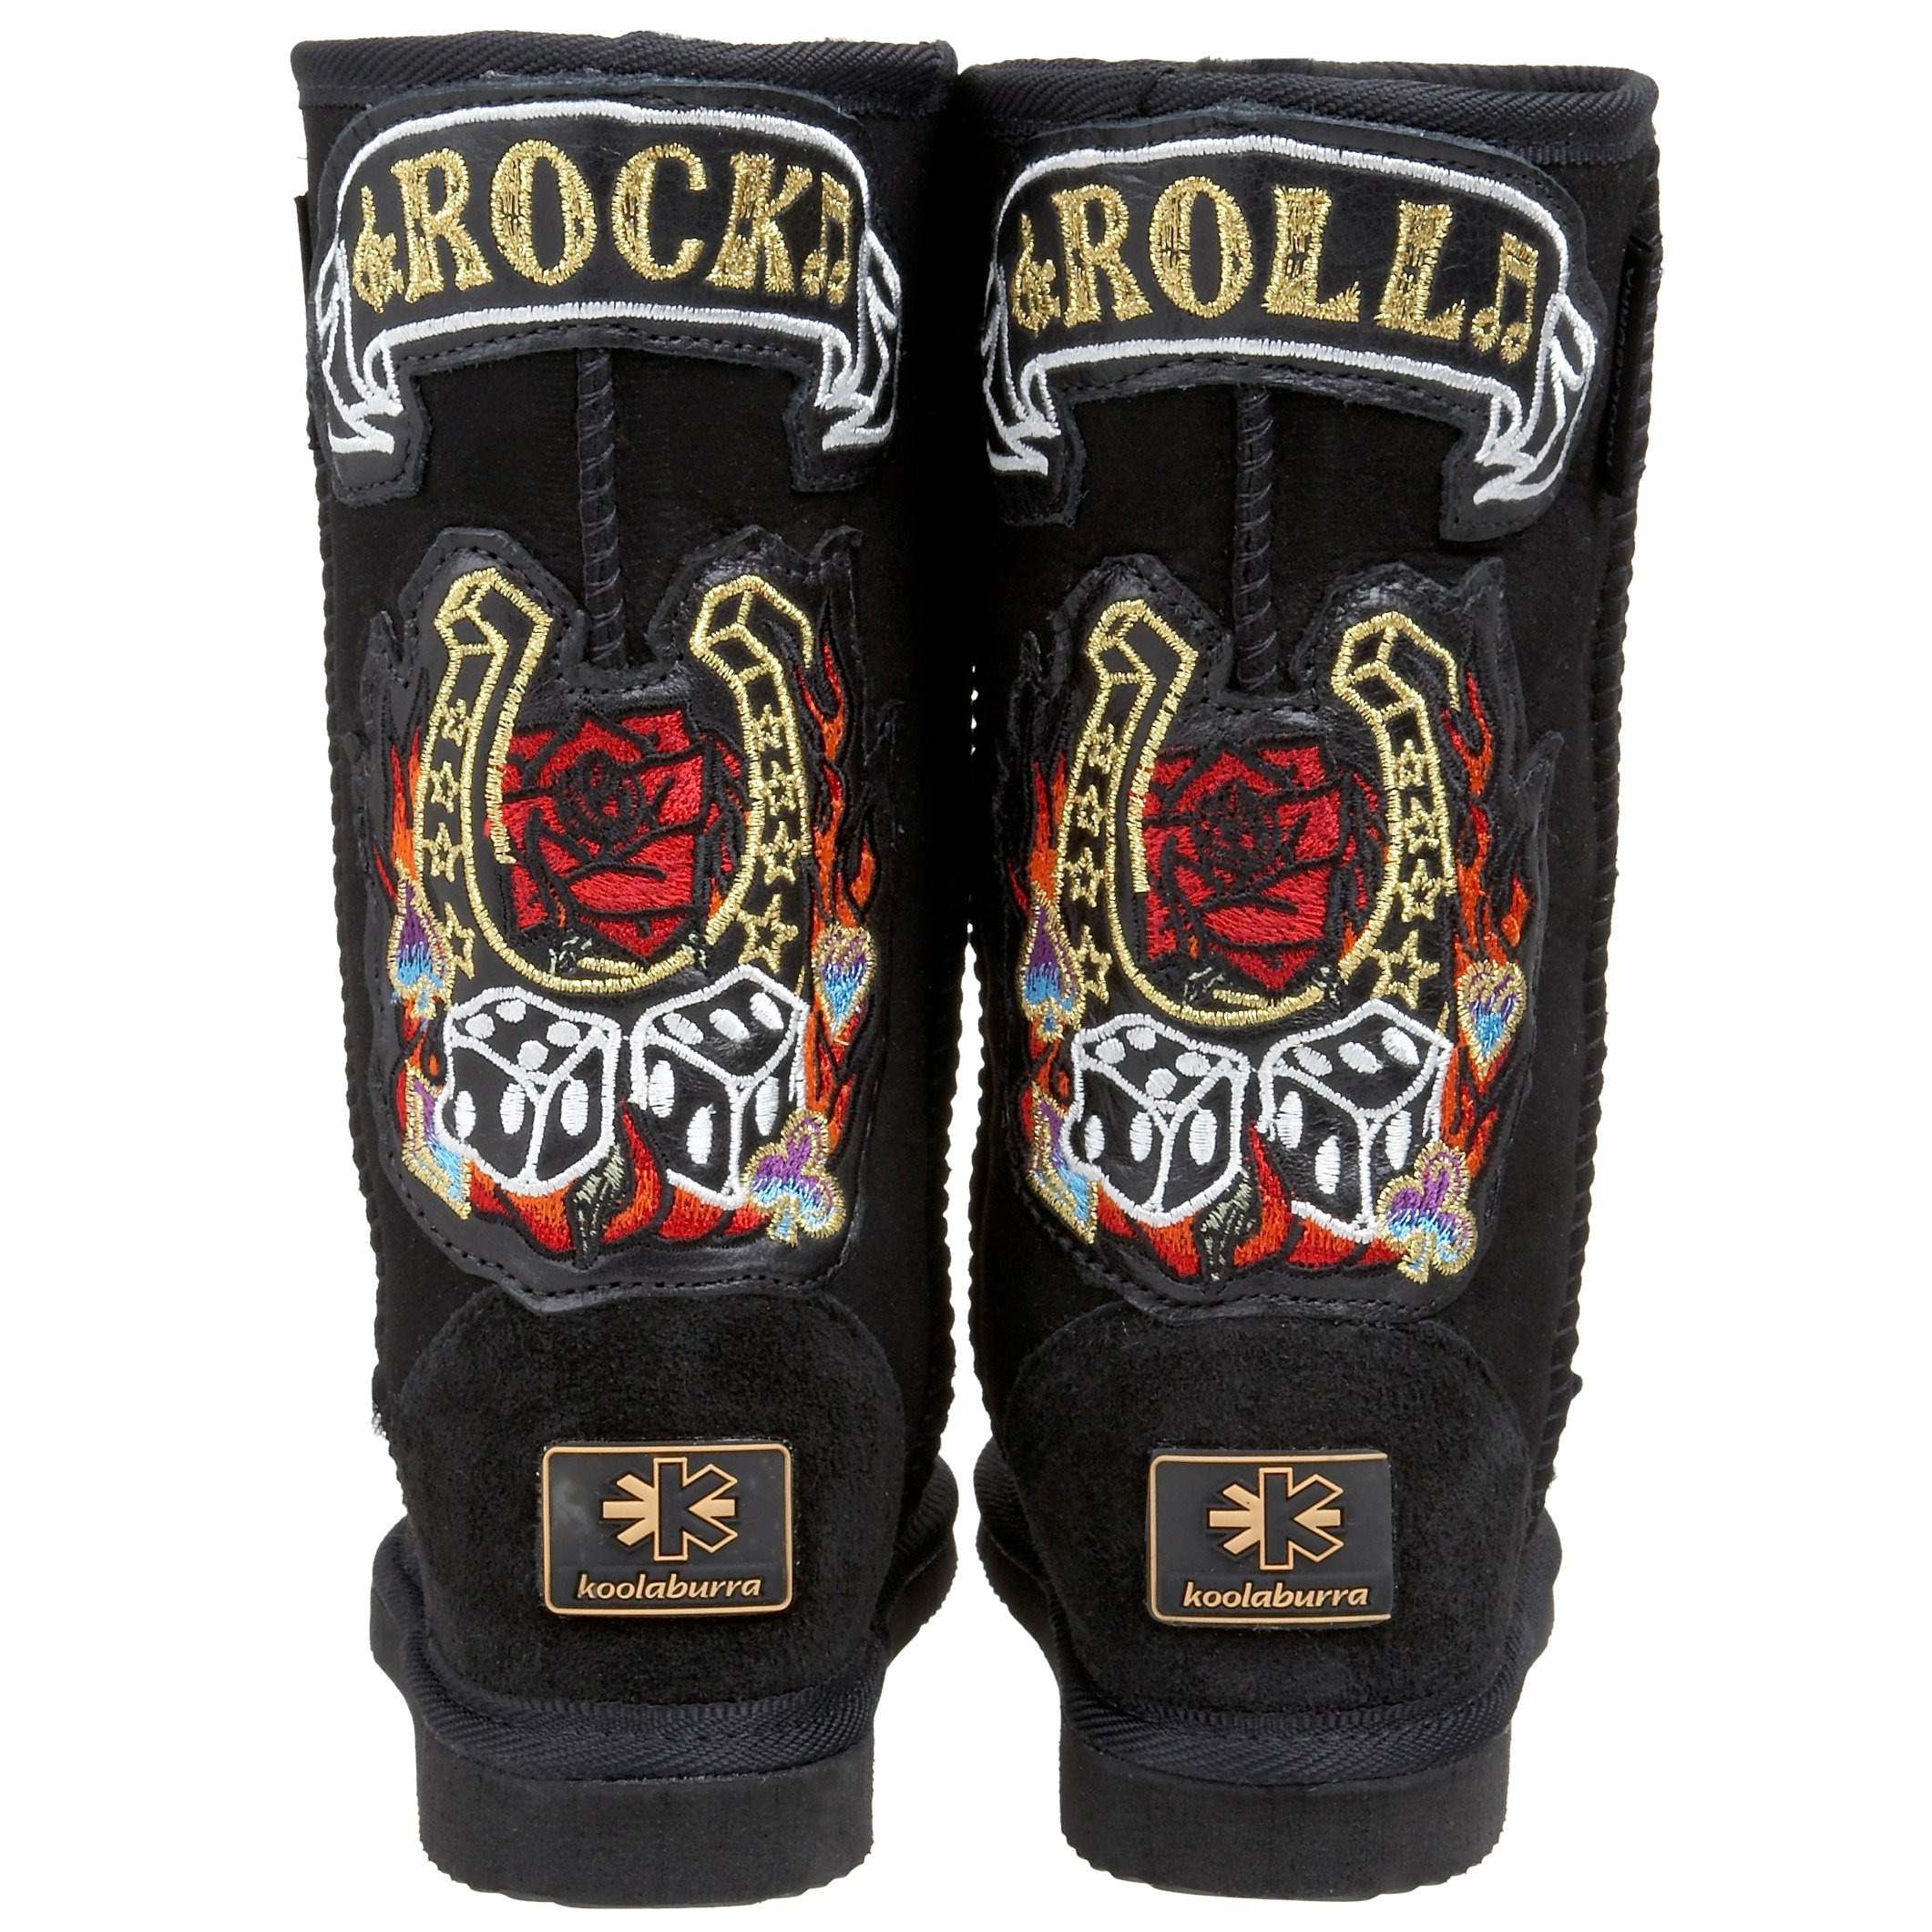 Koolaburra Toddler Rock & Roll Boot